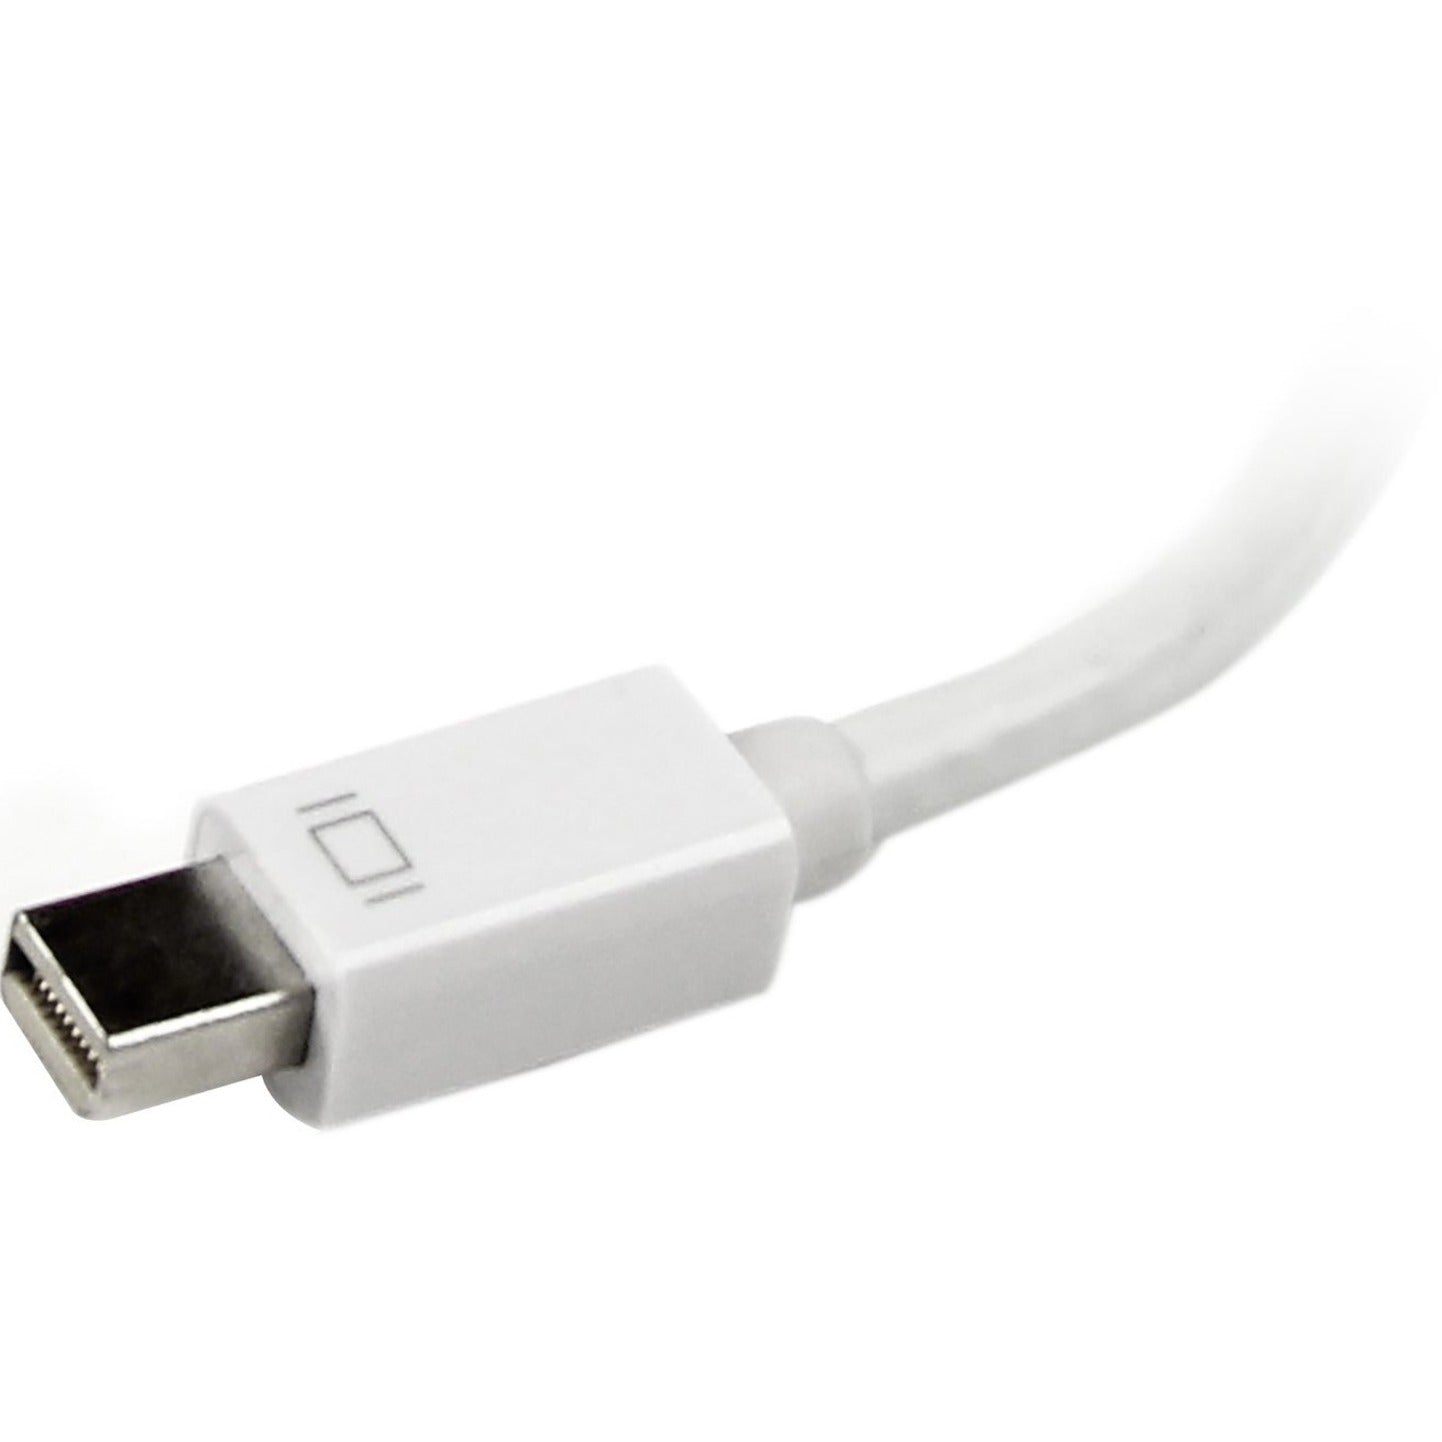 StarTech.com MDP2VGDVHDW Travel A/V Adapter: 3-in-1 Mini DisplayPort to VGA DVI or HDMI Converter, White